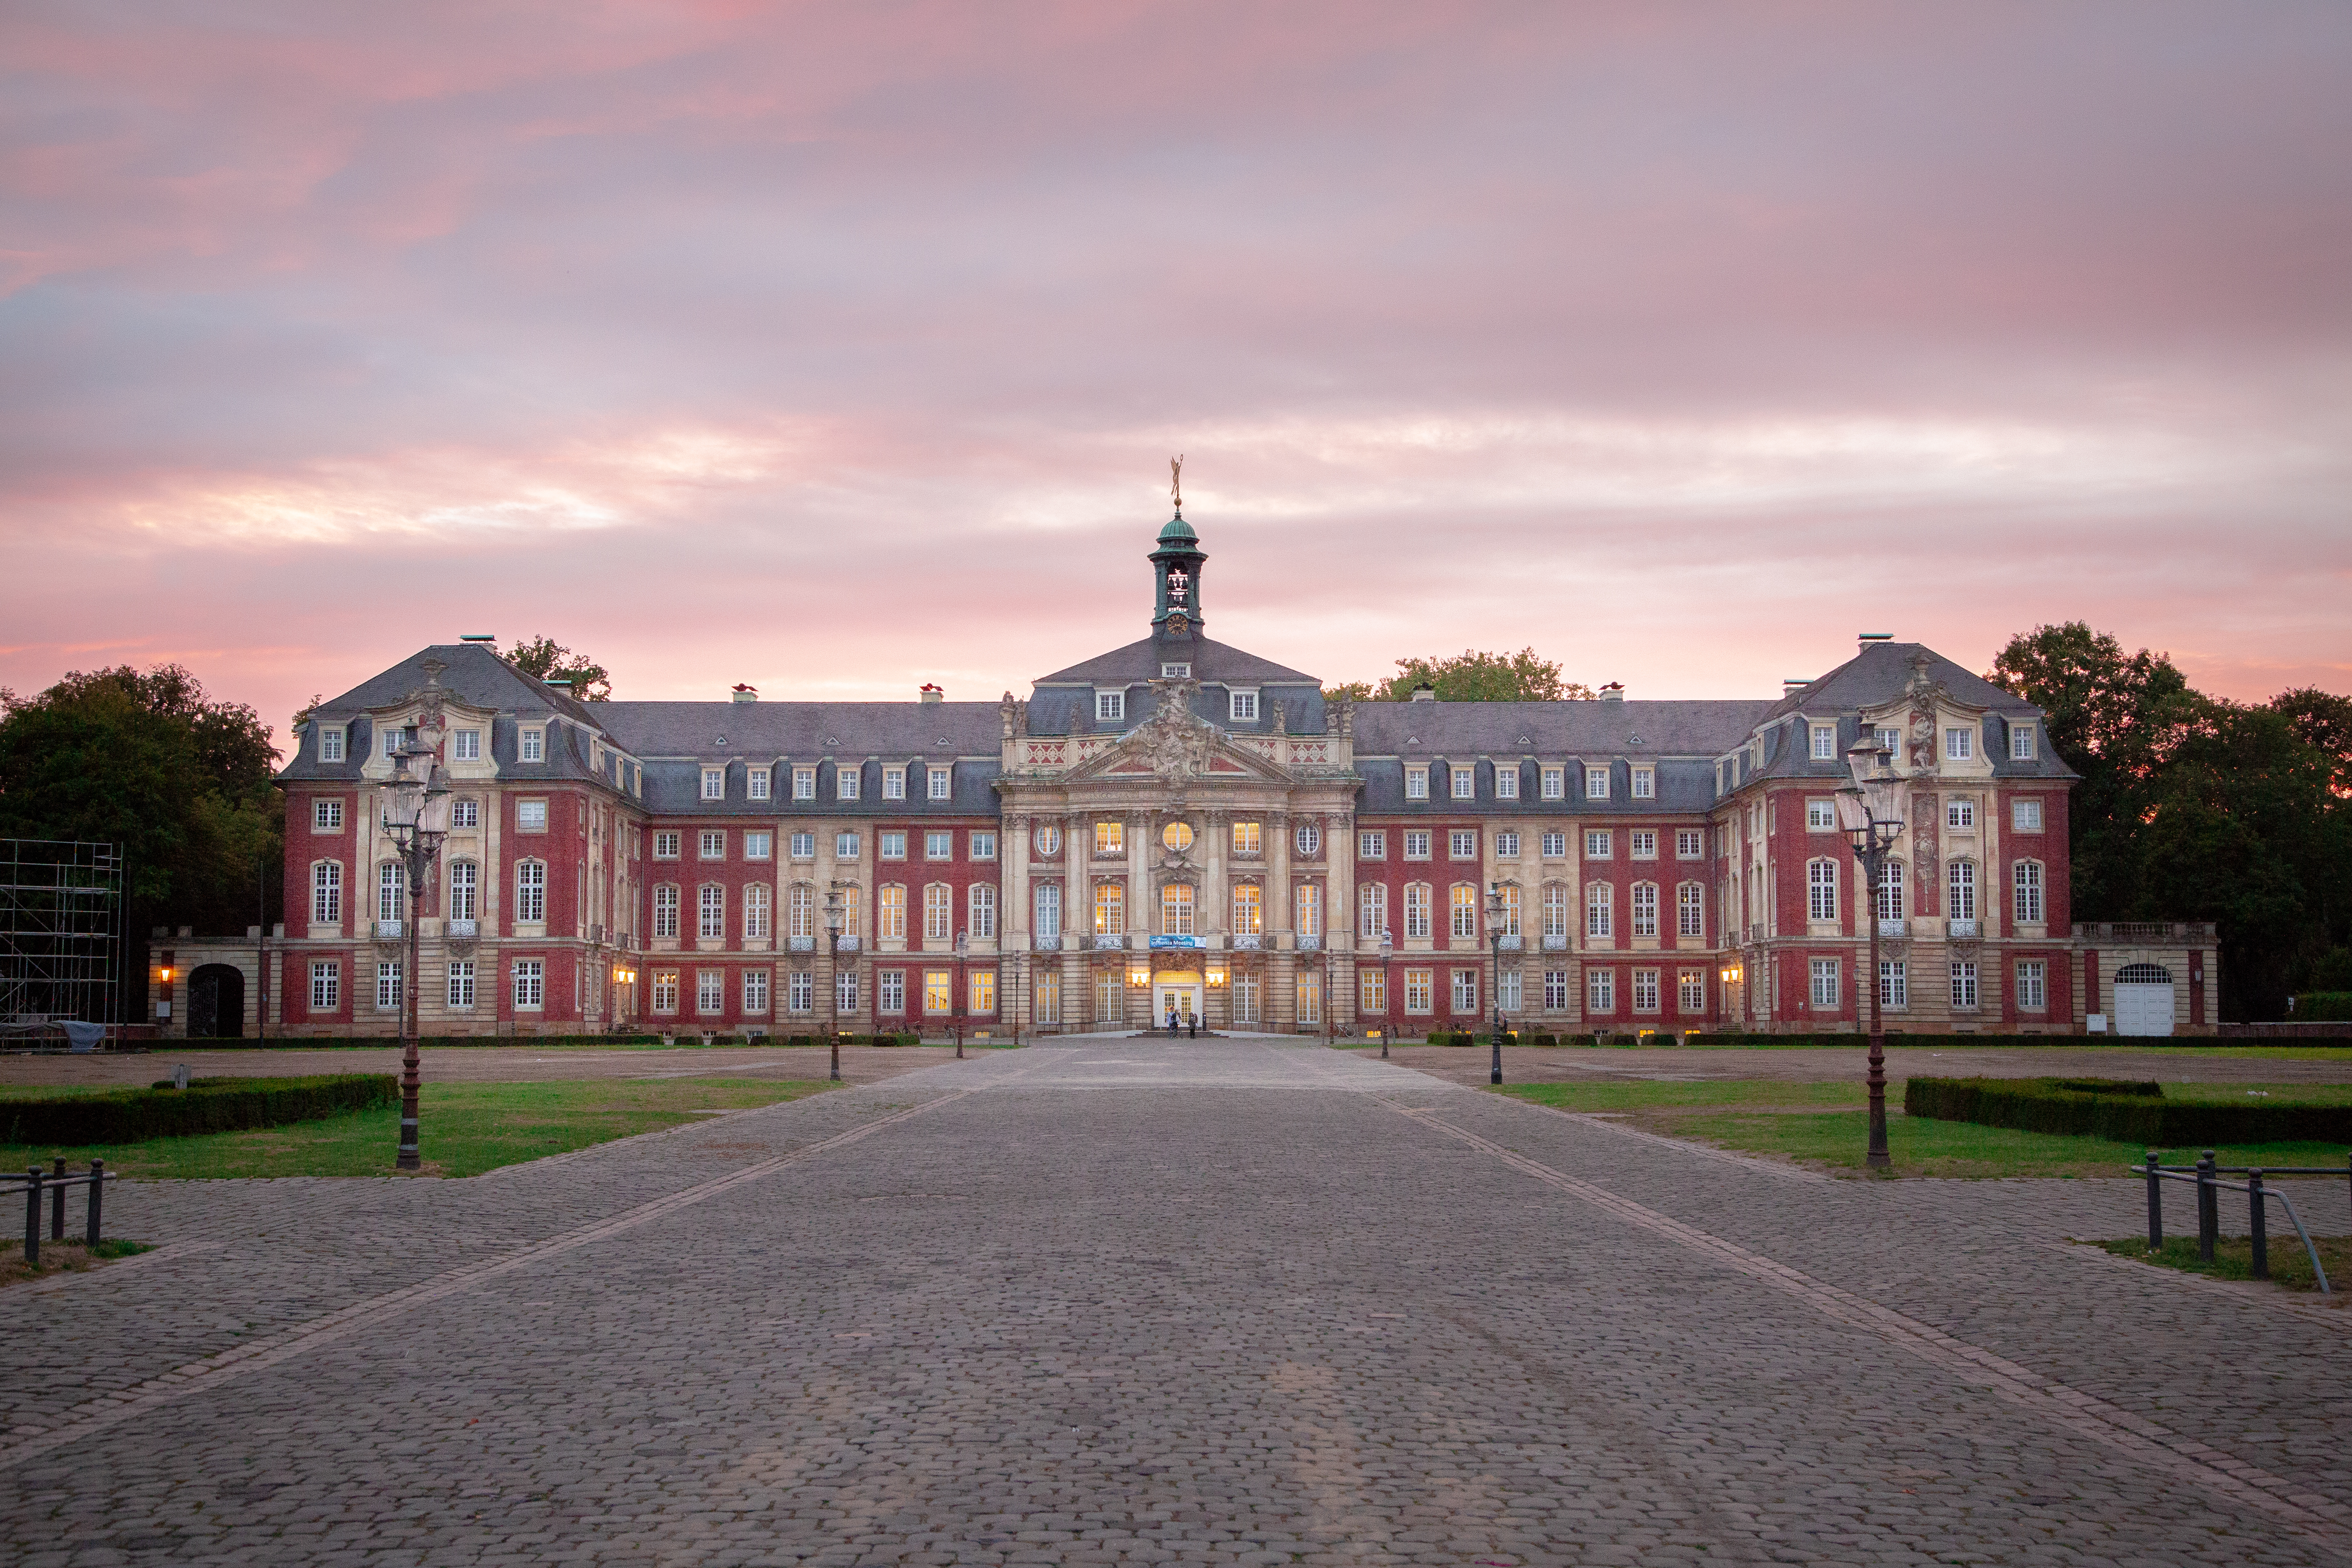 Castle l University of Muenster